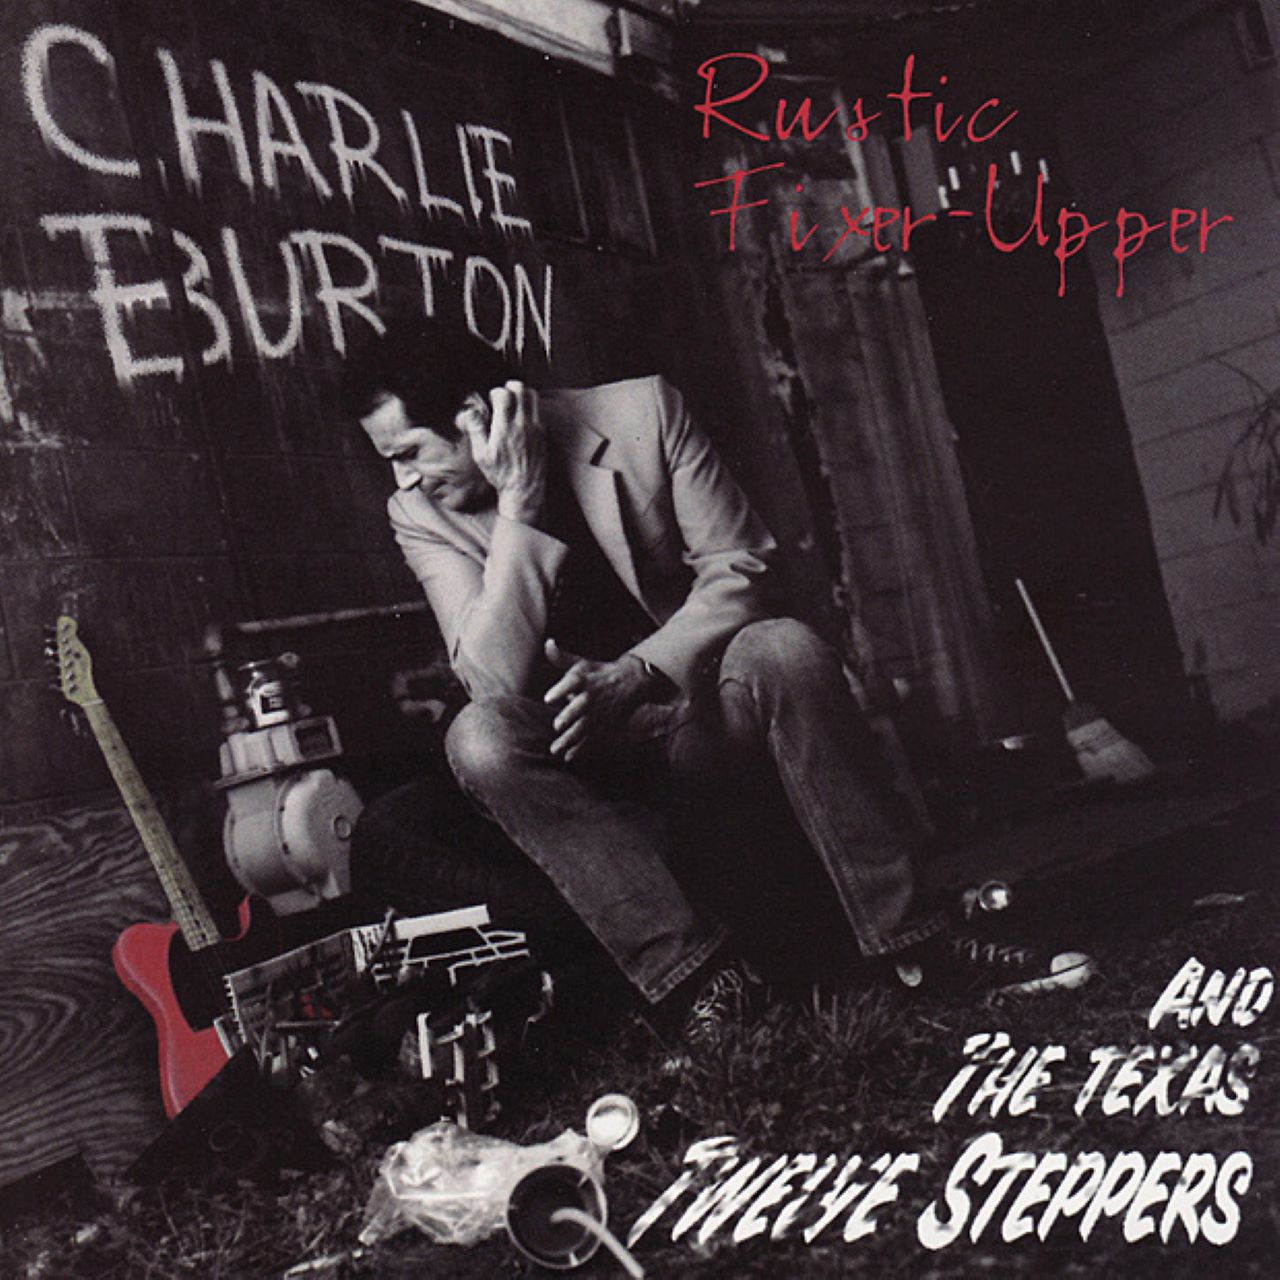 Charlie Burton & Texas Twelve Steppers - Rustic Fixer-Upper cover album